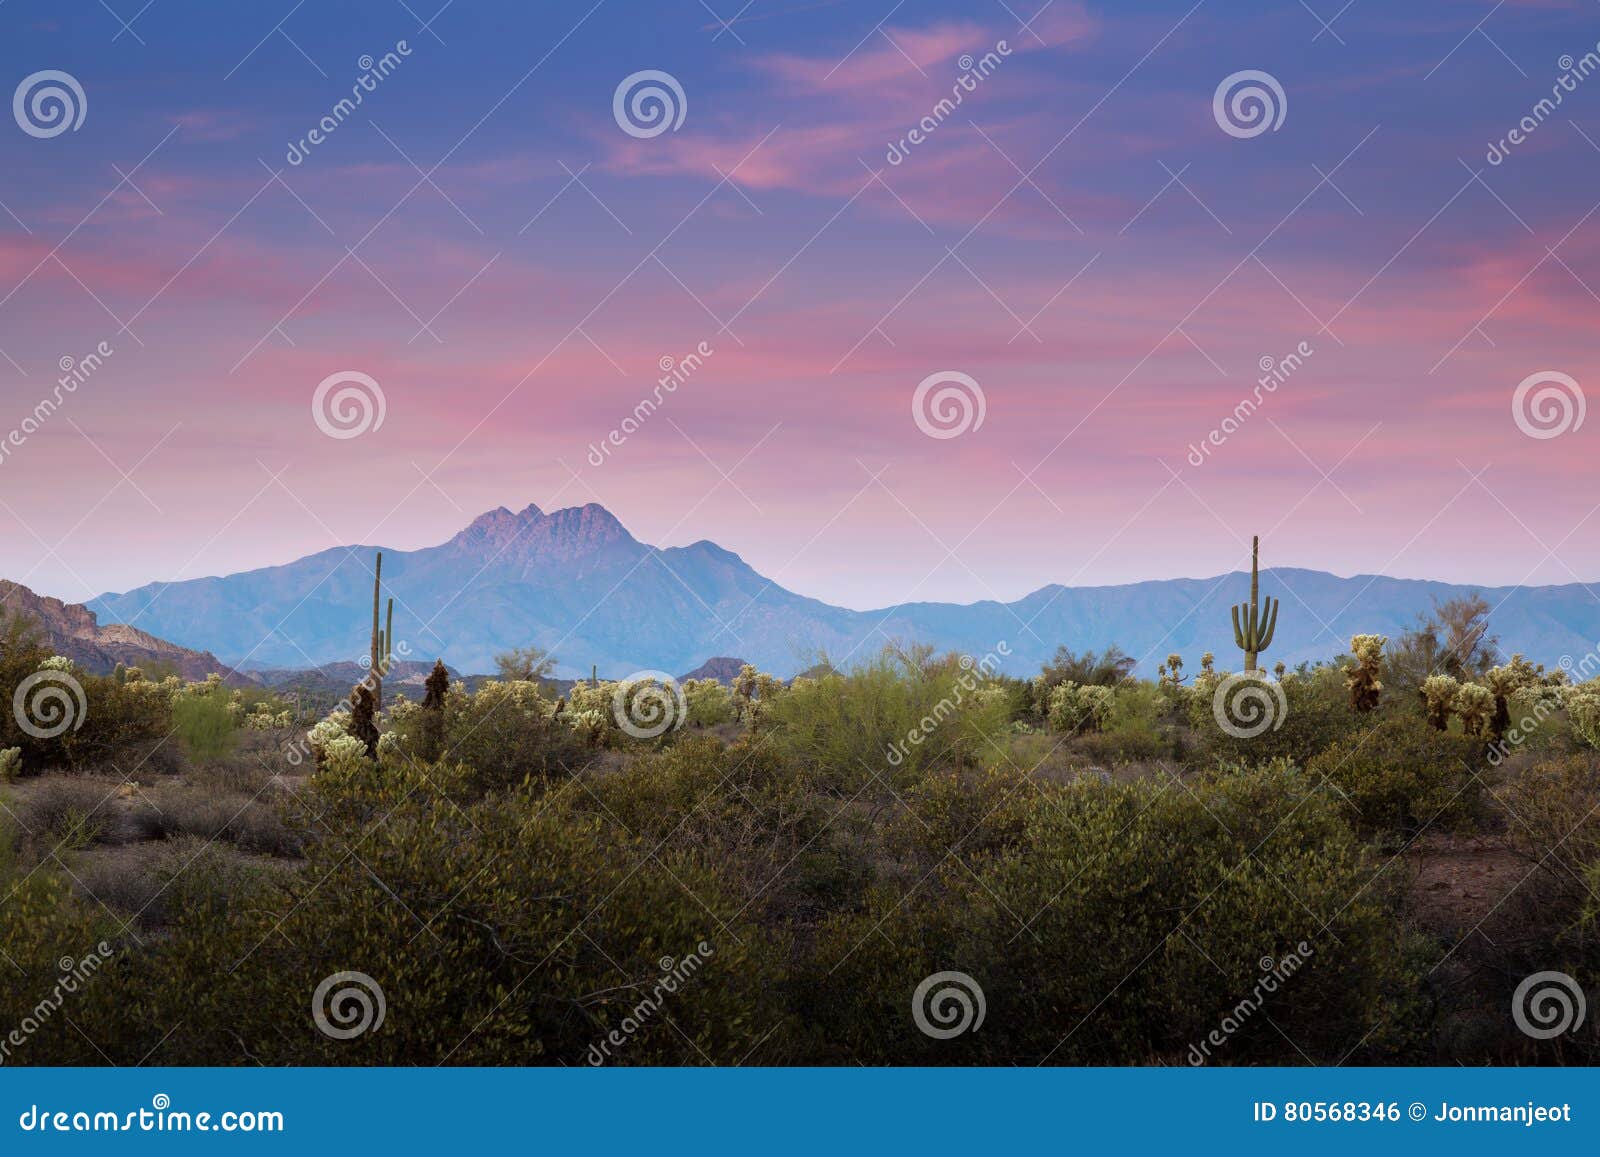 superstition mountains in arizona